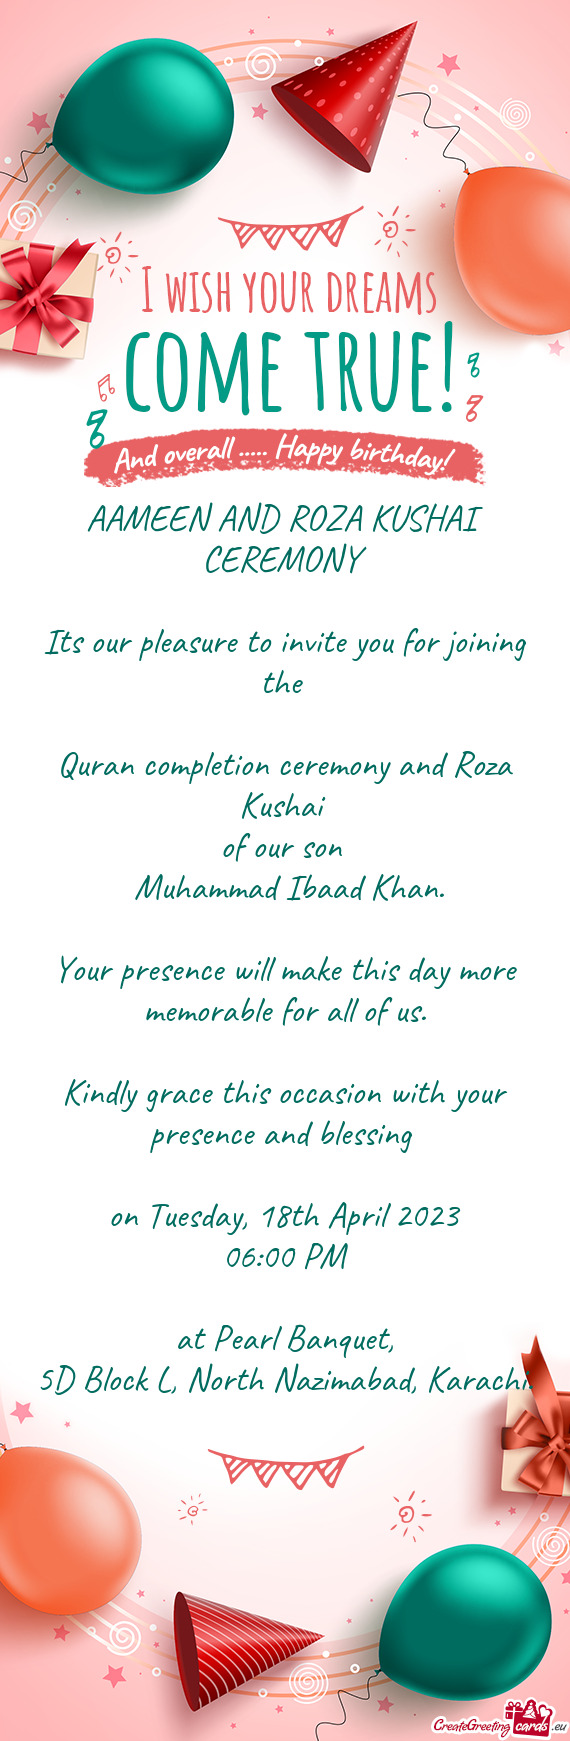 Quran completion ceremony and Roza Kushai